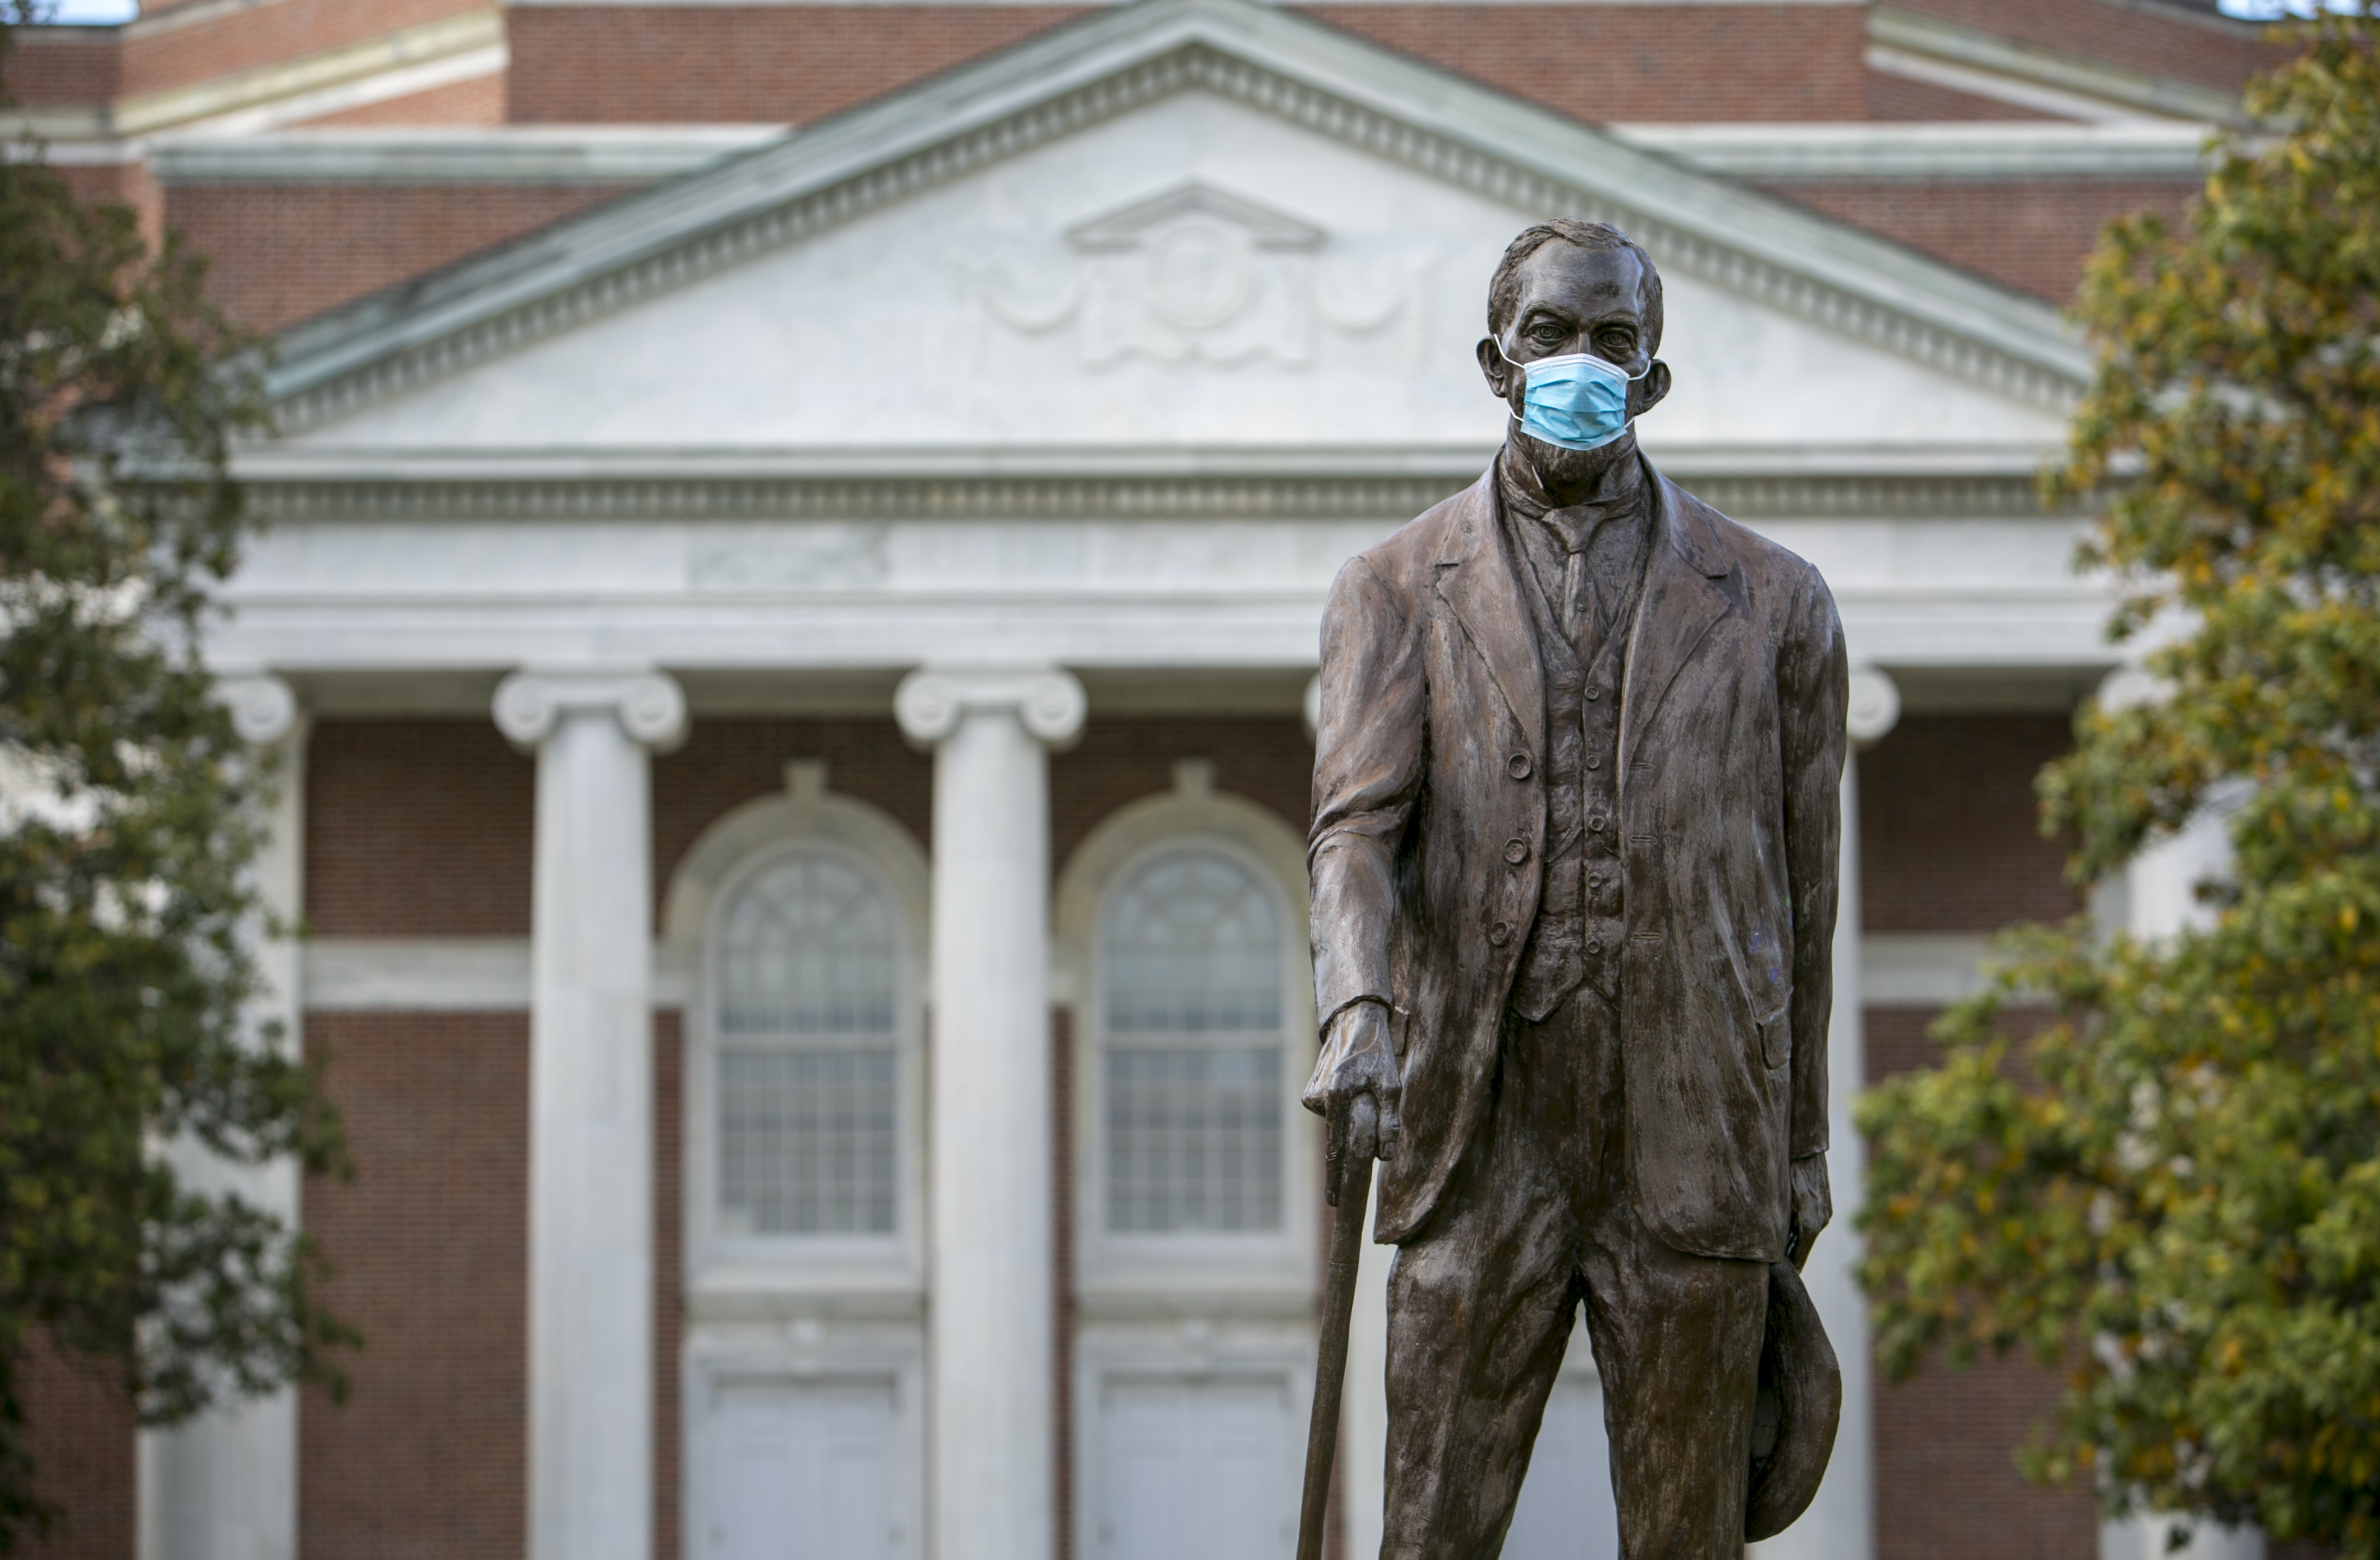 The Benjamin Duke statue wearing a mask.